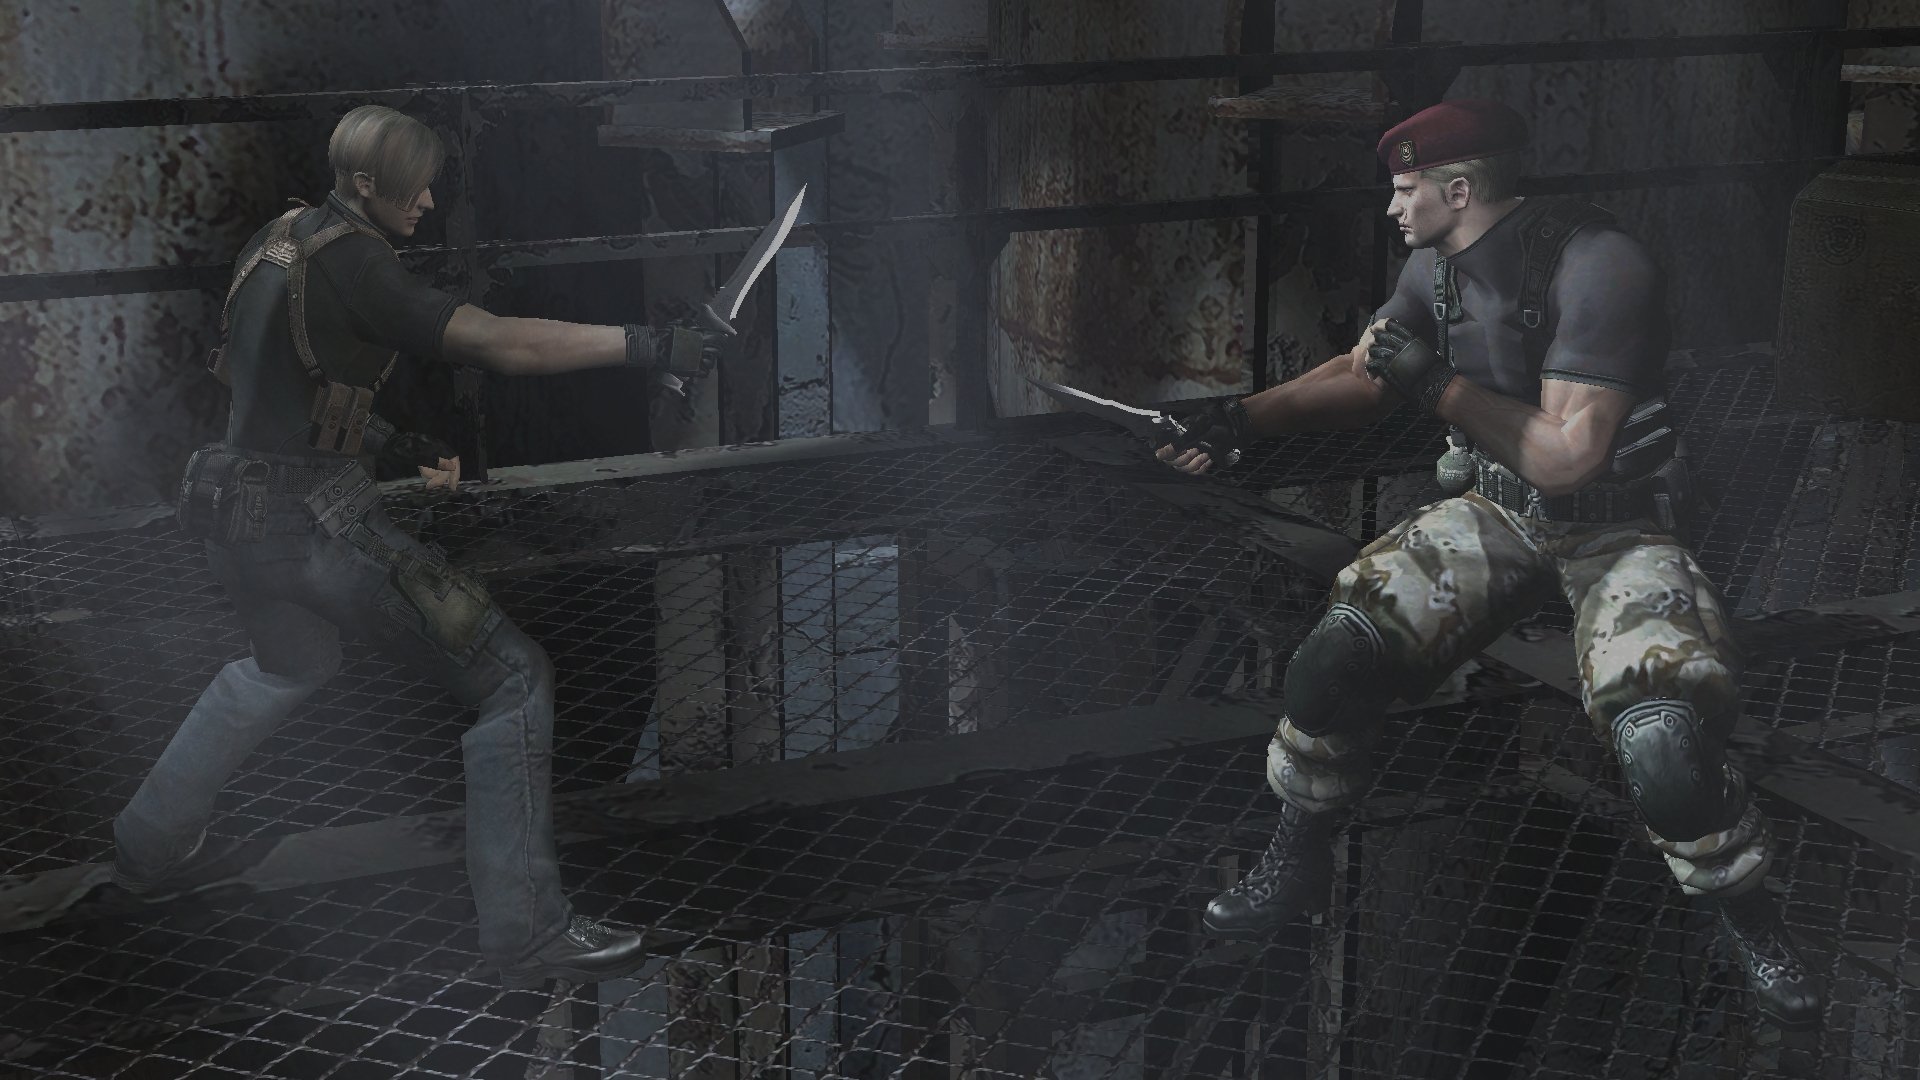 Media asset in full size related to 3dfxzone.it news item entitled as follows: Capcom annuncia la data di lancio di Resident Evil 4 per PS4 e Xbox One | Image Name: news24563_Resident-Evil-4-Screenshot_8.jpg